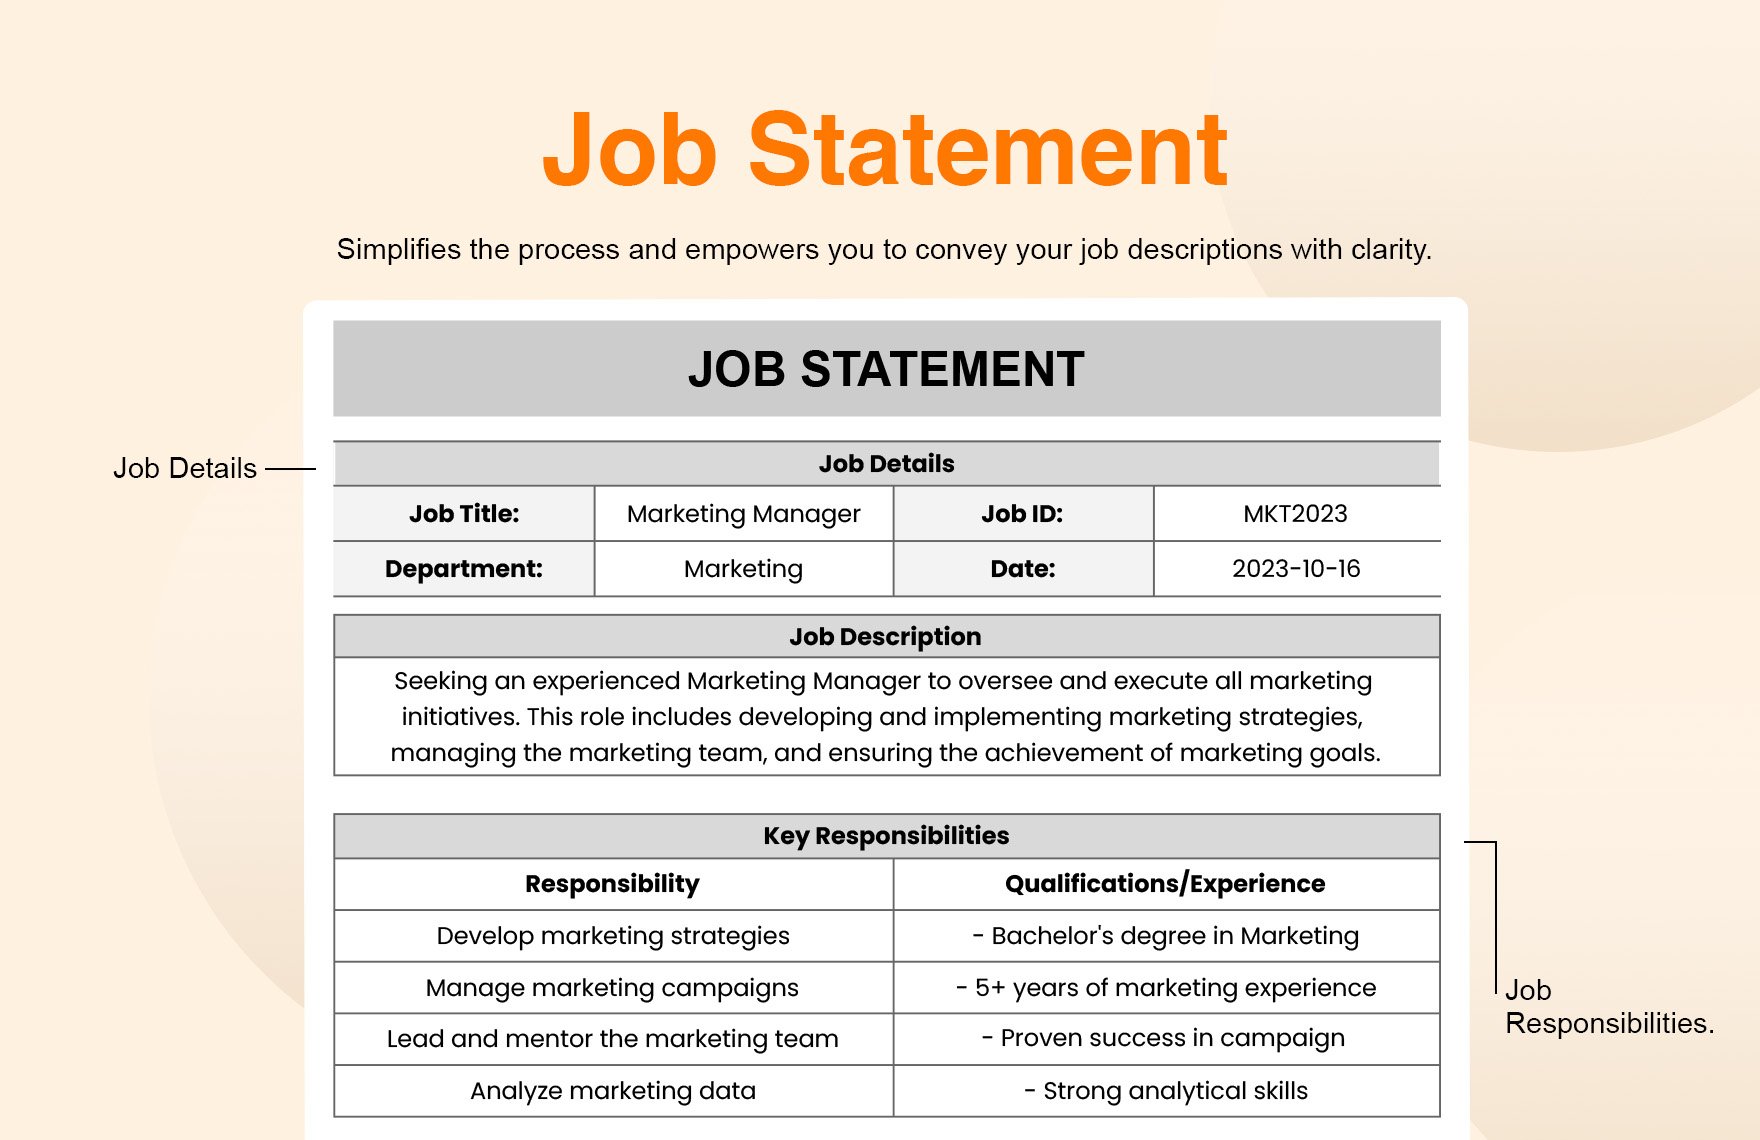 Job Statement Template